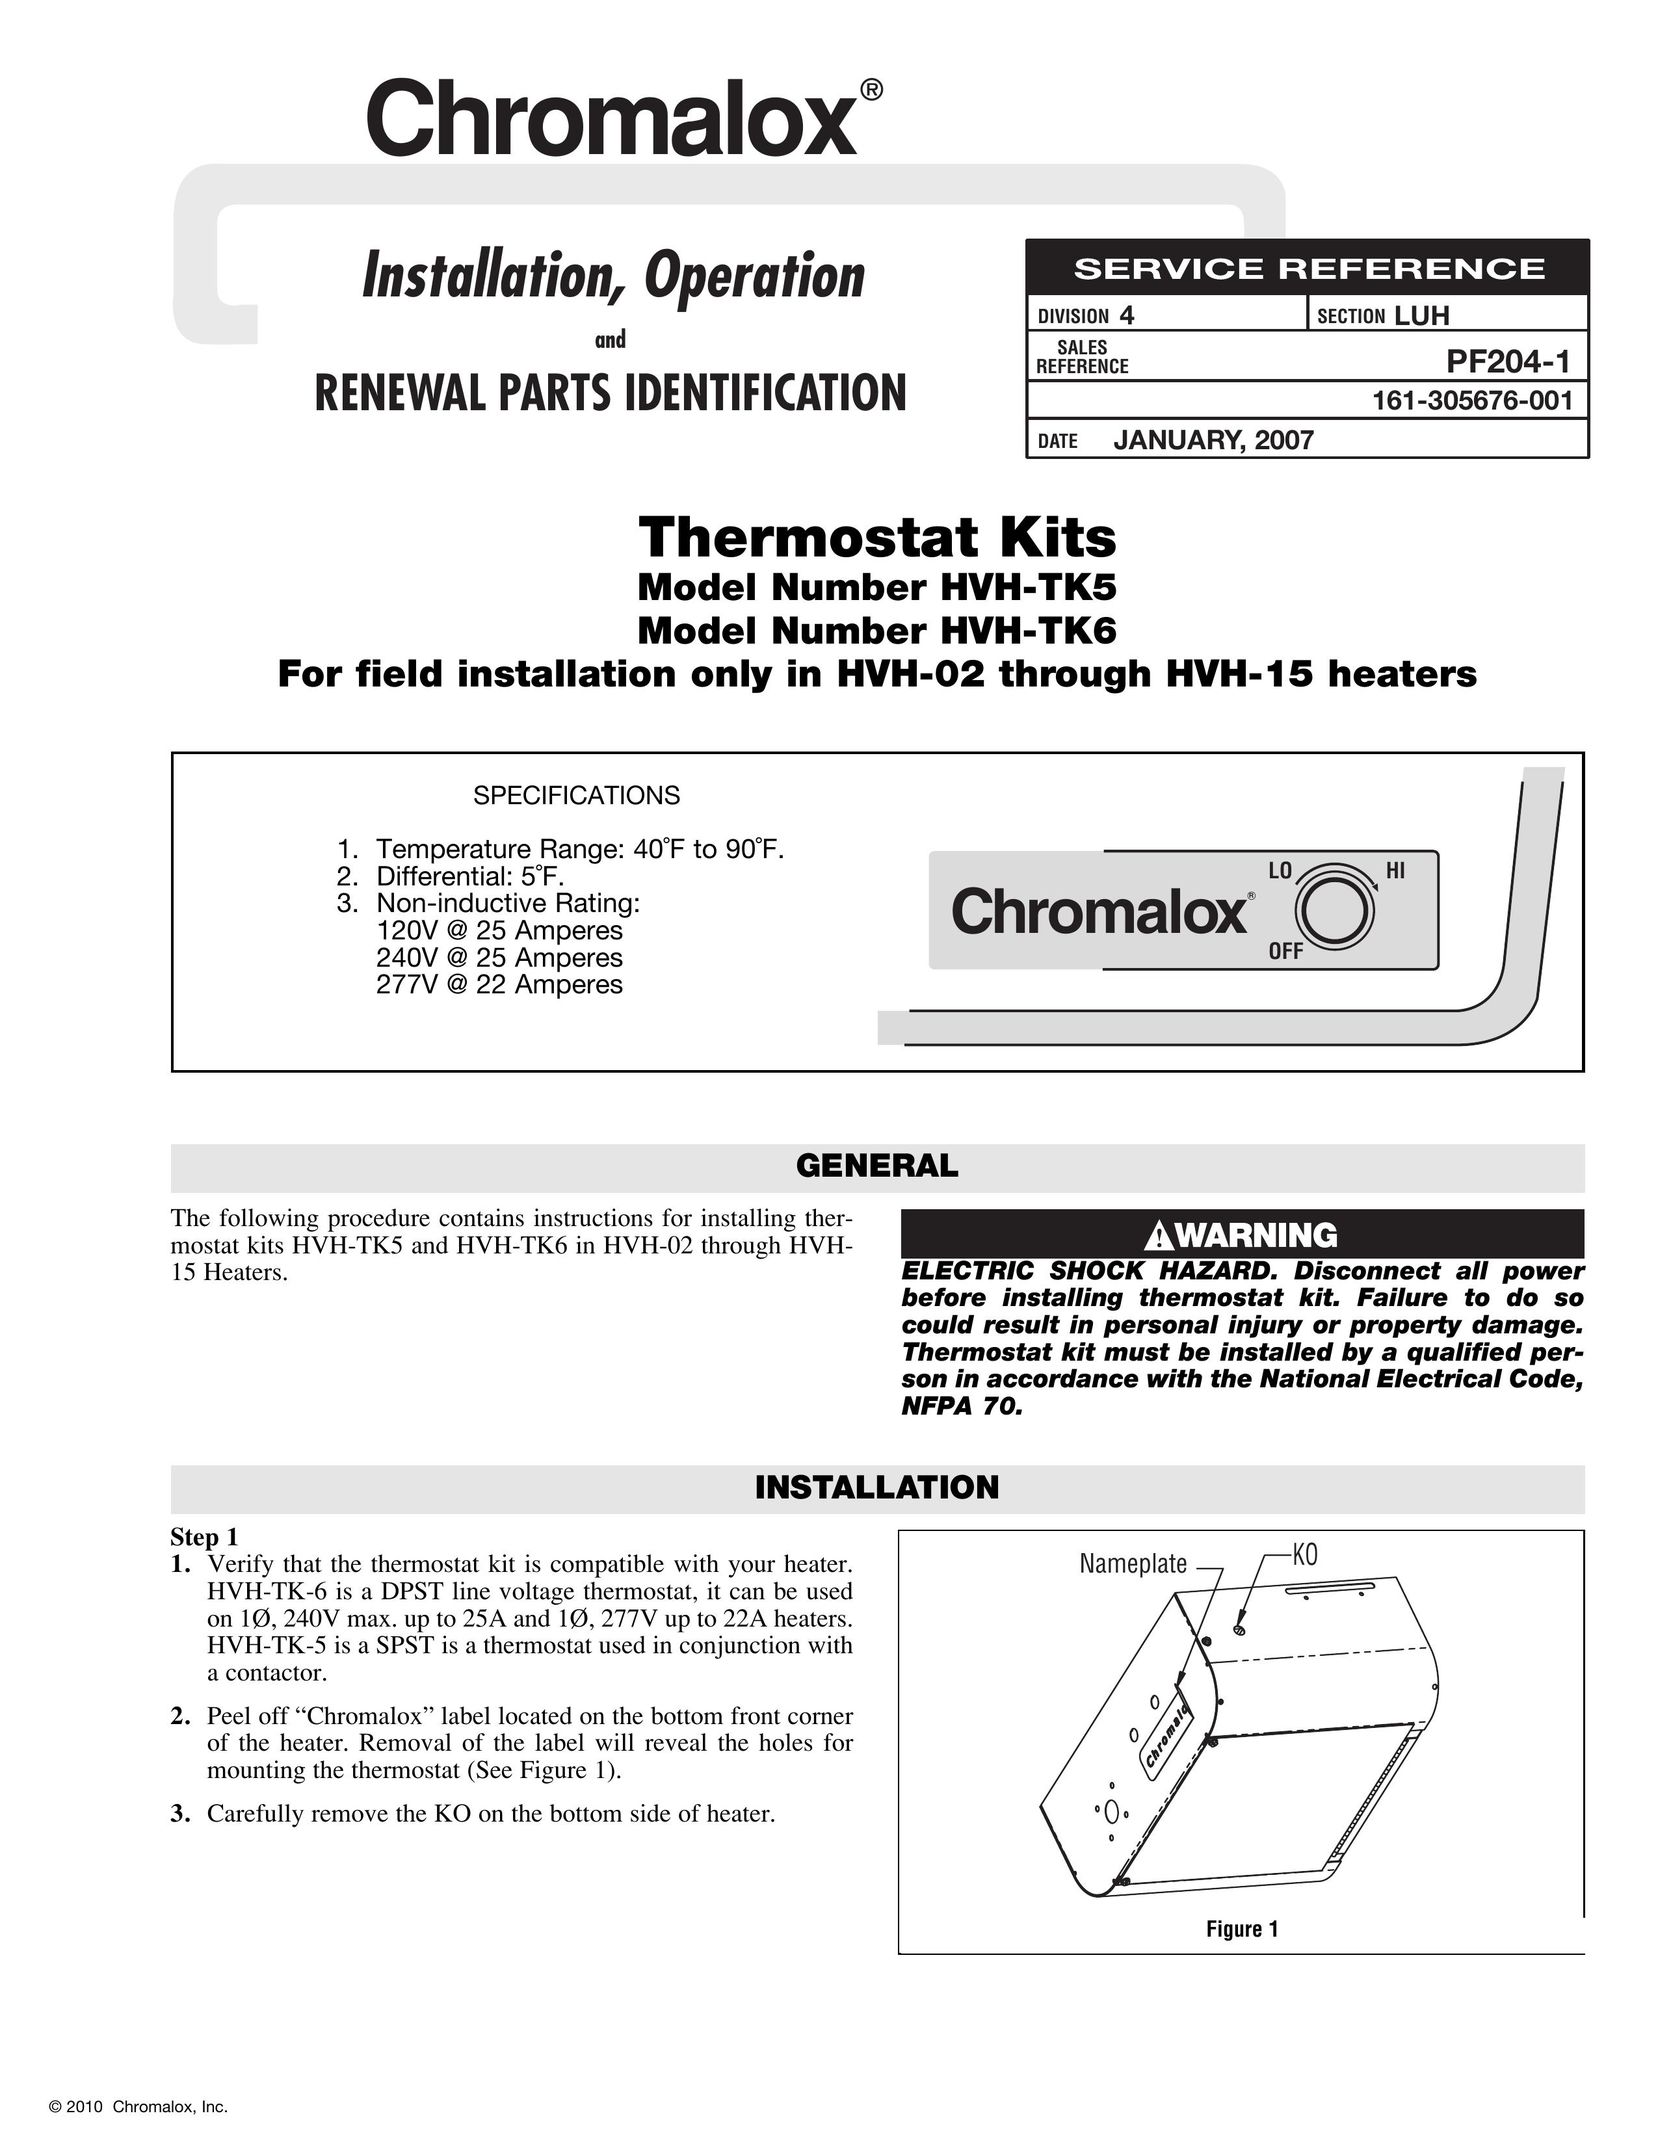 Chromalox HVH-TK5 Thermostat User Manual